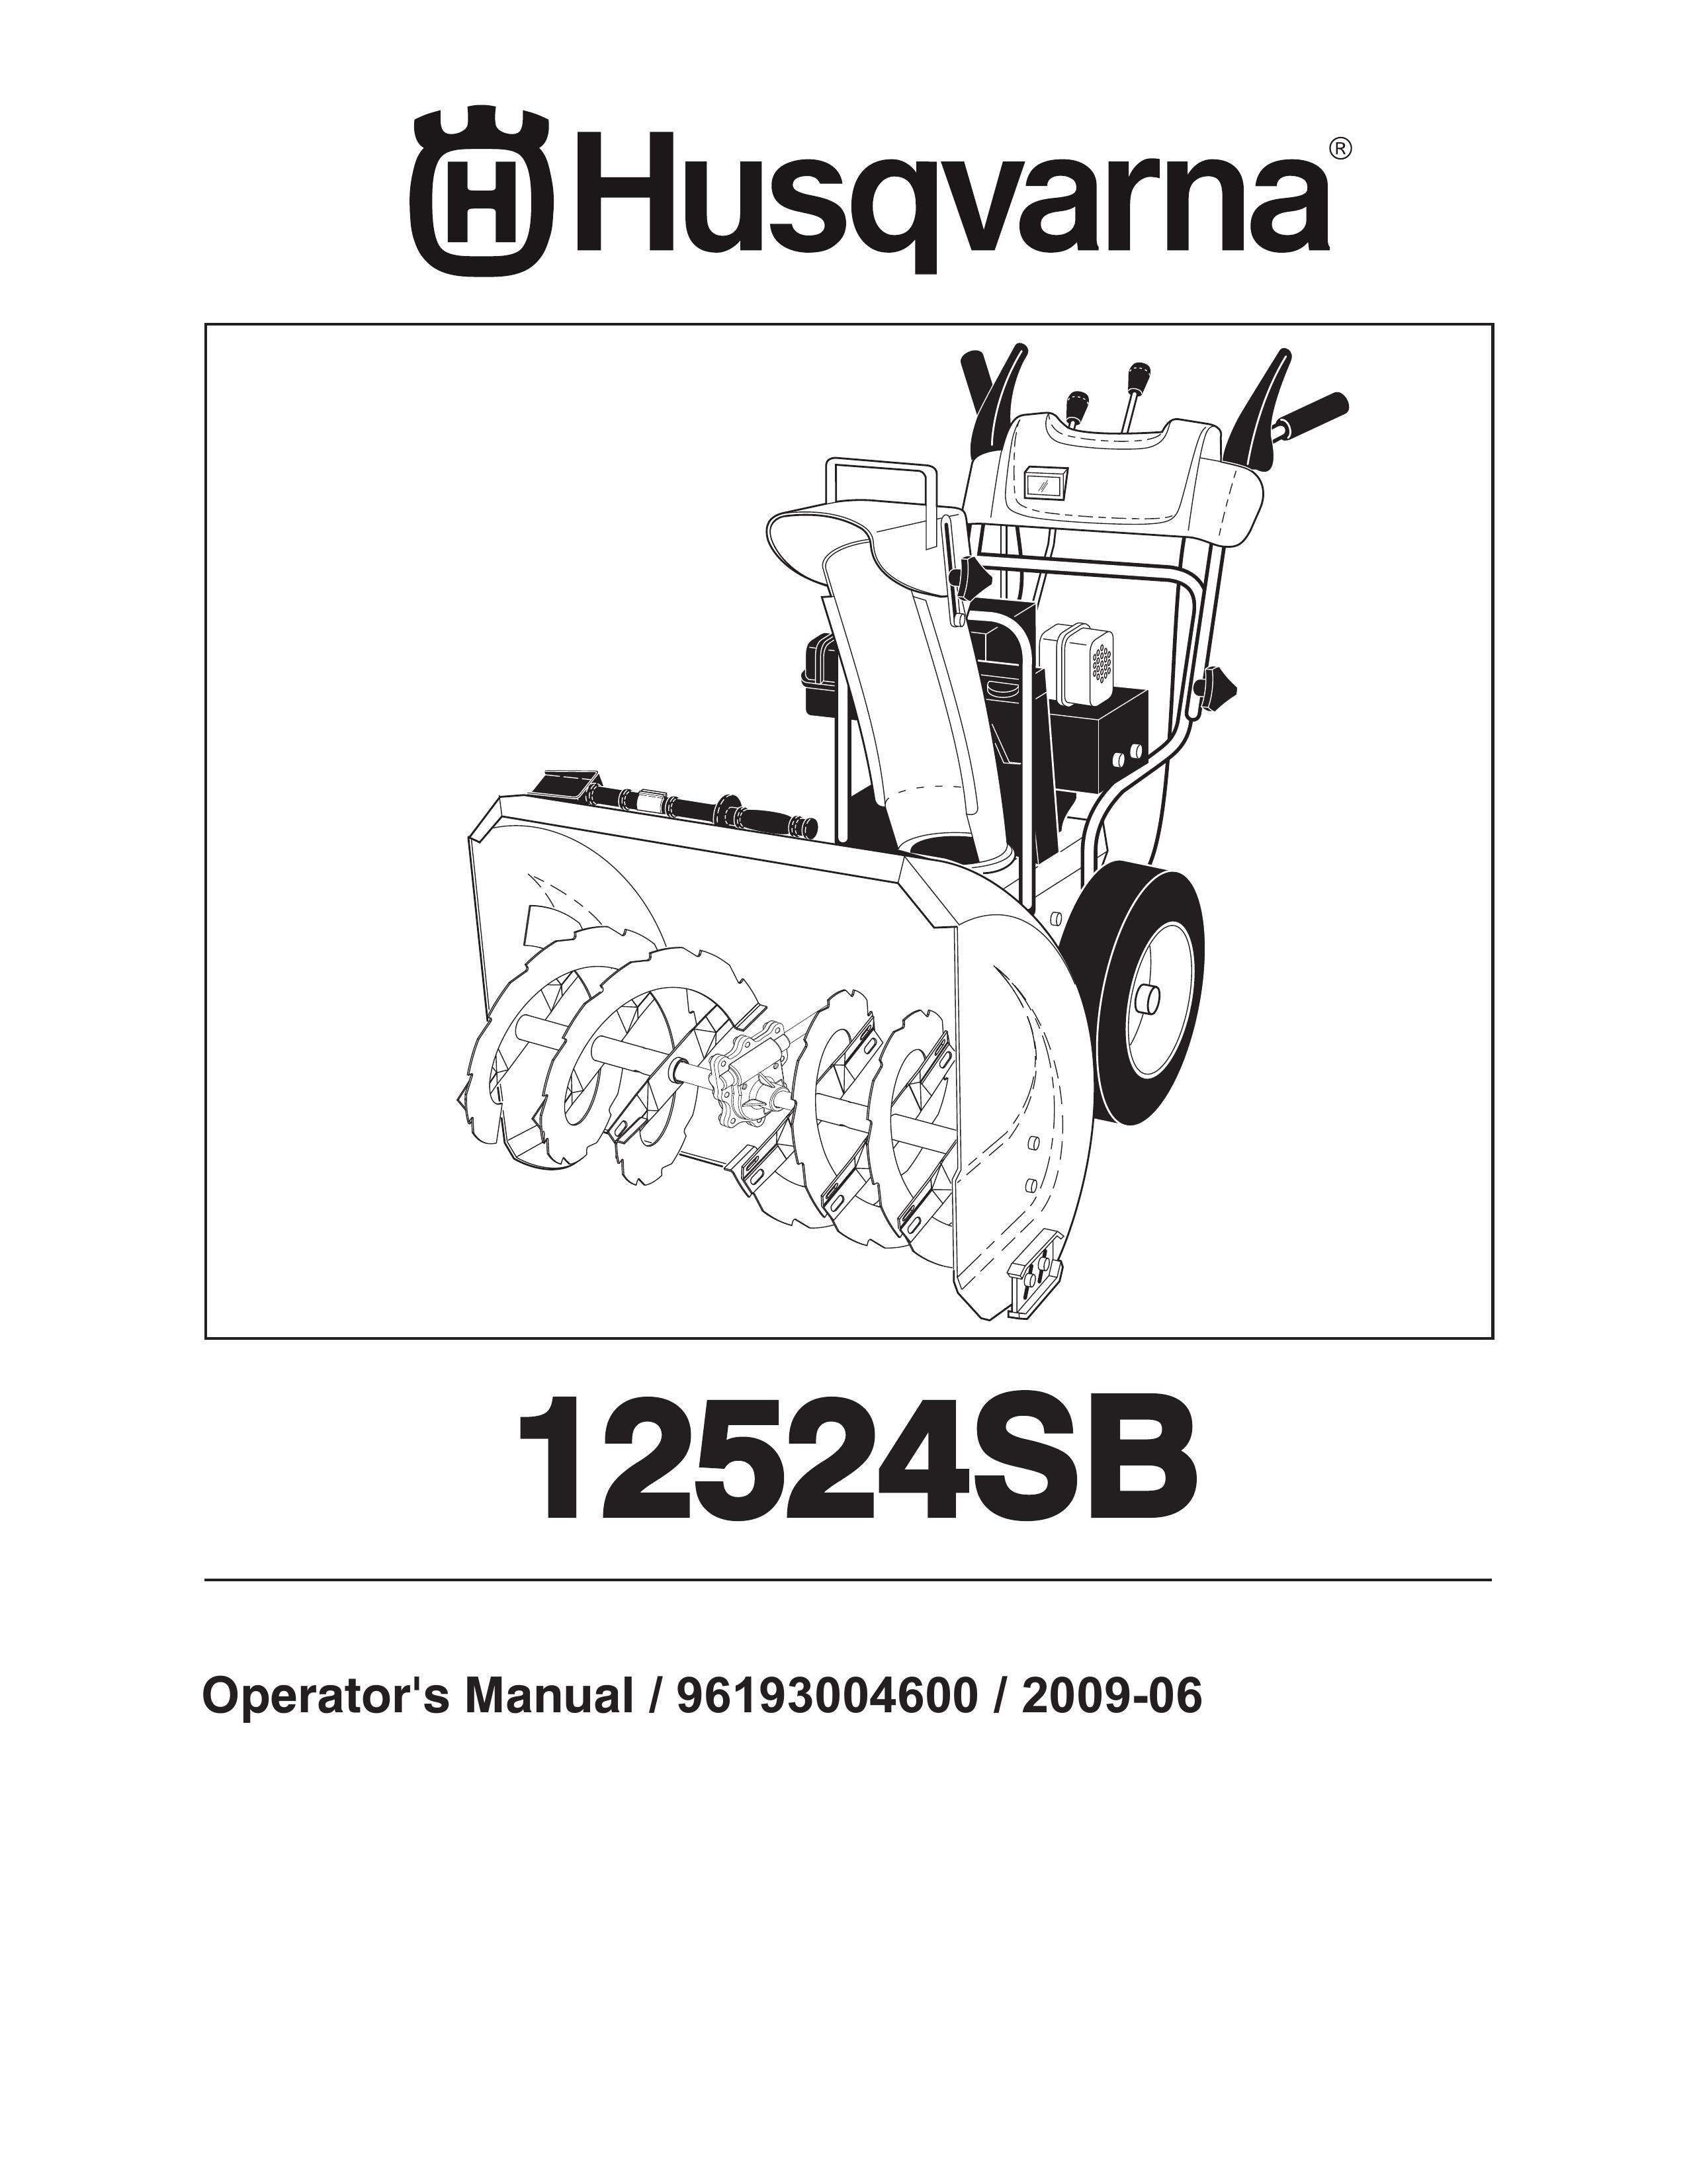 Husqvarna 12524SB Snow Blower User Manual